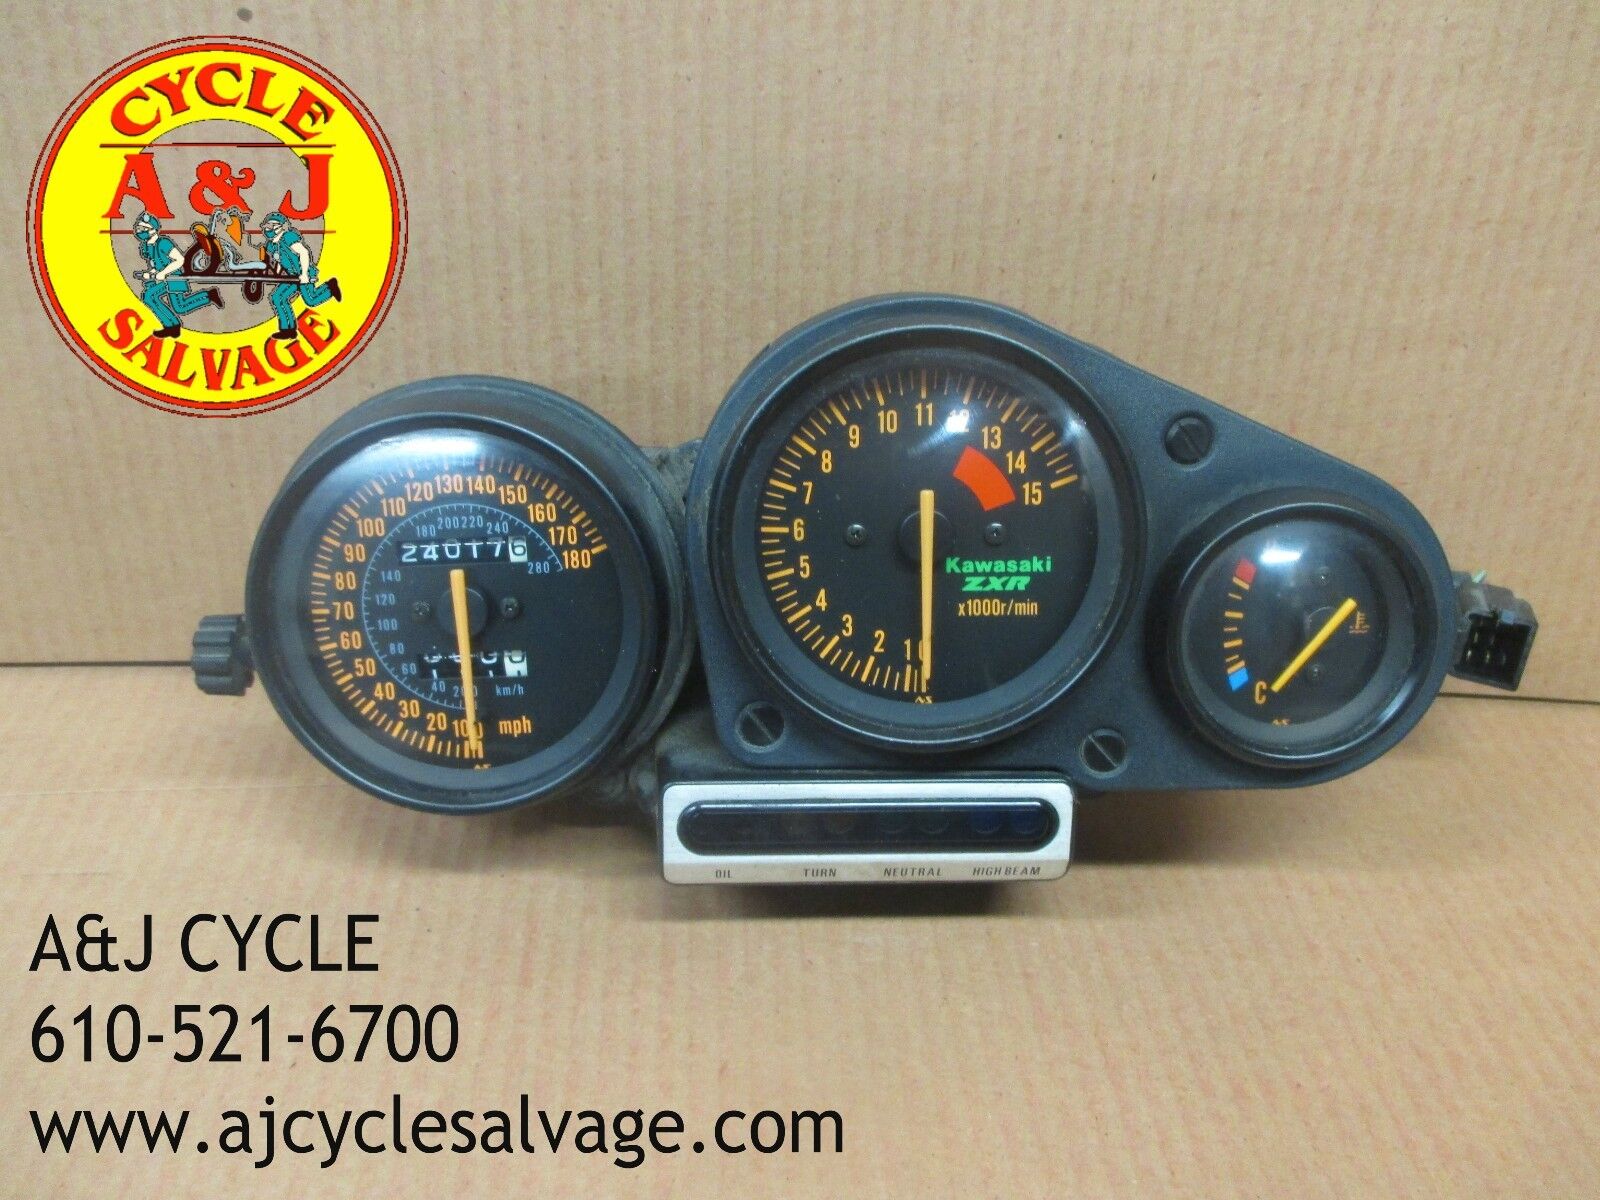 1993-1995 Kawasaki ZX-7, Gauges, speedometer, tachometer, 24,017 miles